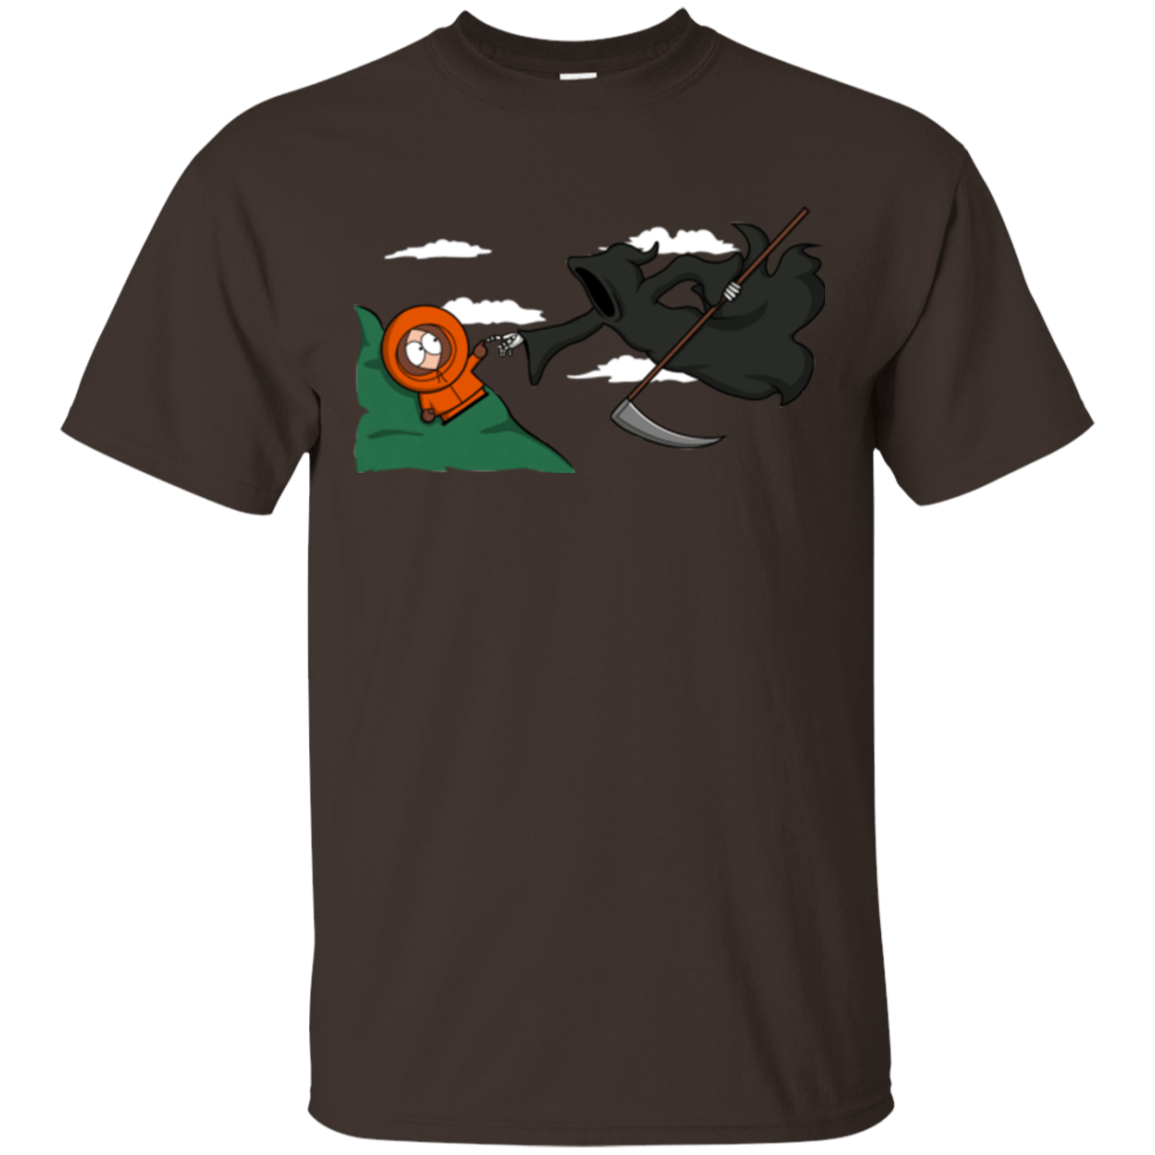 T-Shirts Dark Chocolate / S The Extinction T-Shirt